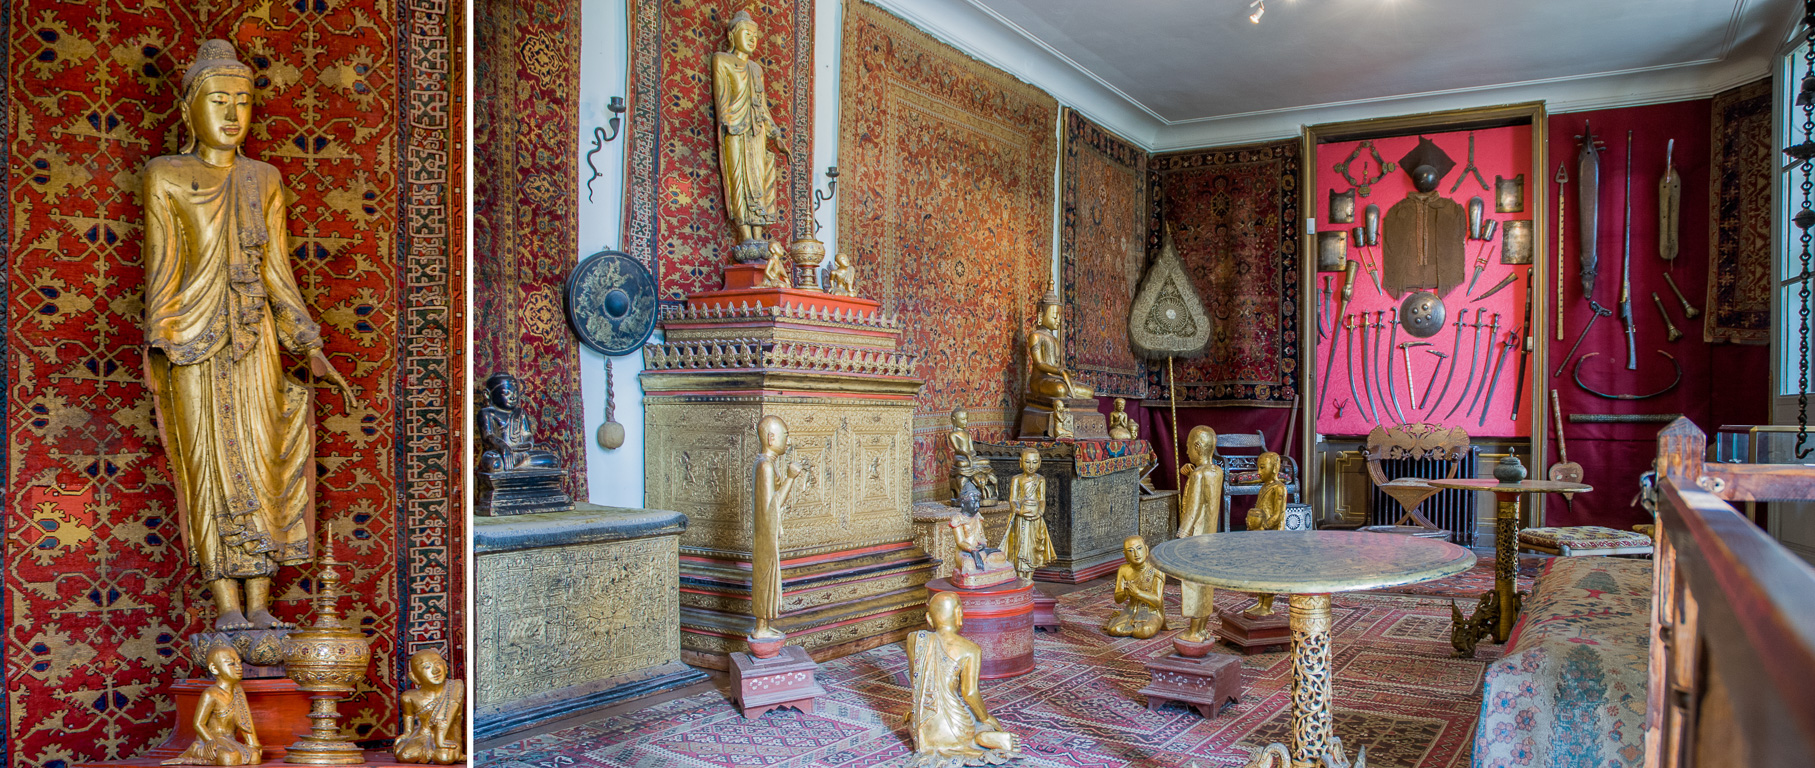 Musée de l'Abbaye de Chaâlis. Salle Orientale et salon indo-birman. Grand Bouddha.